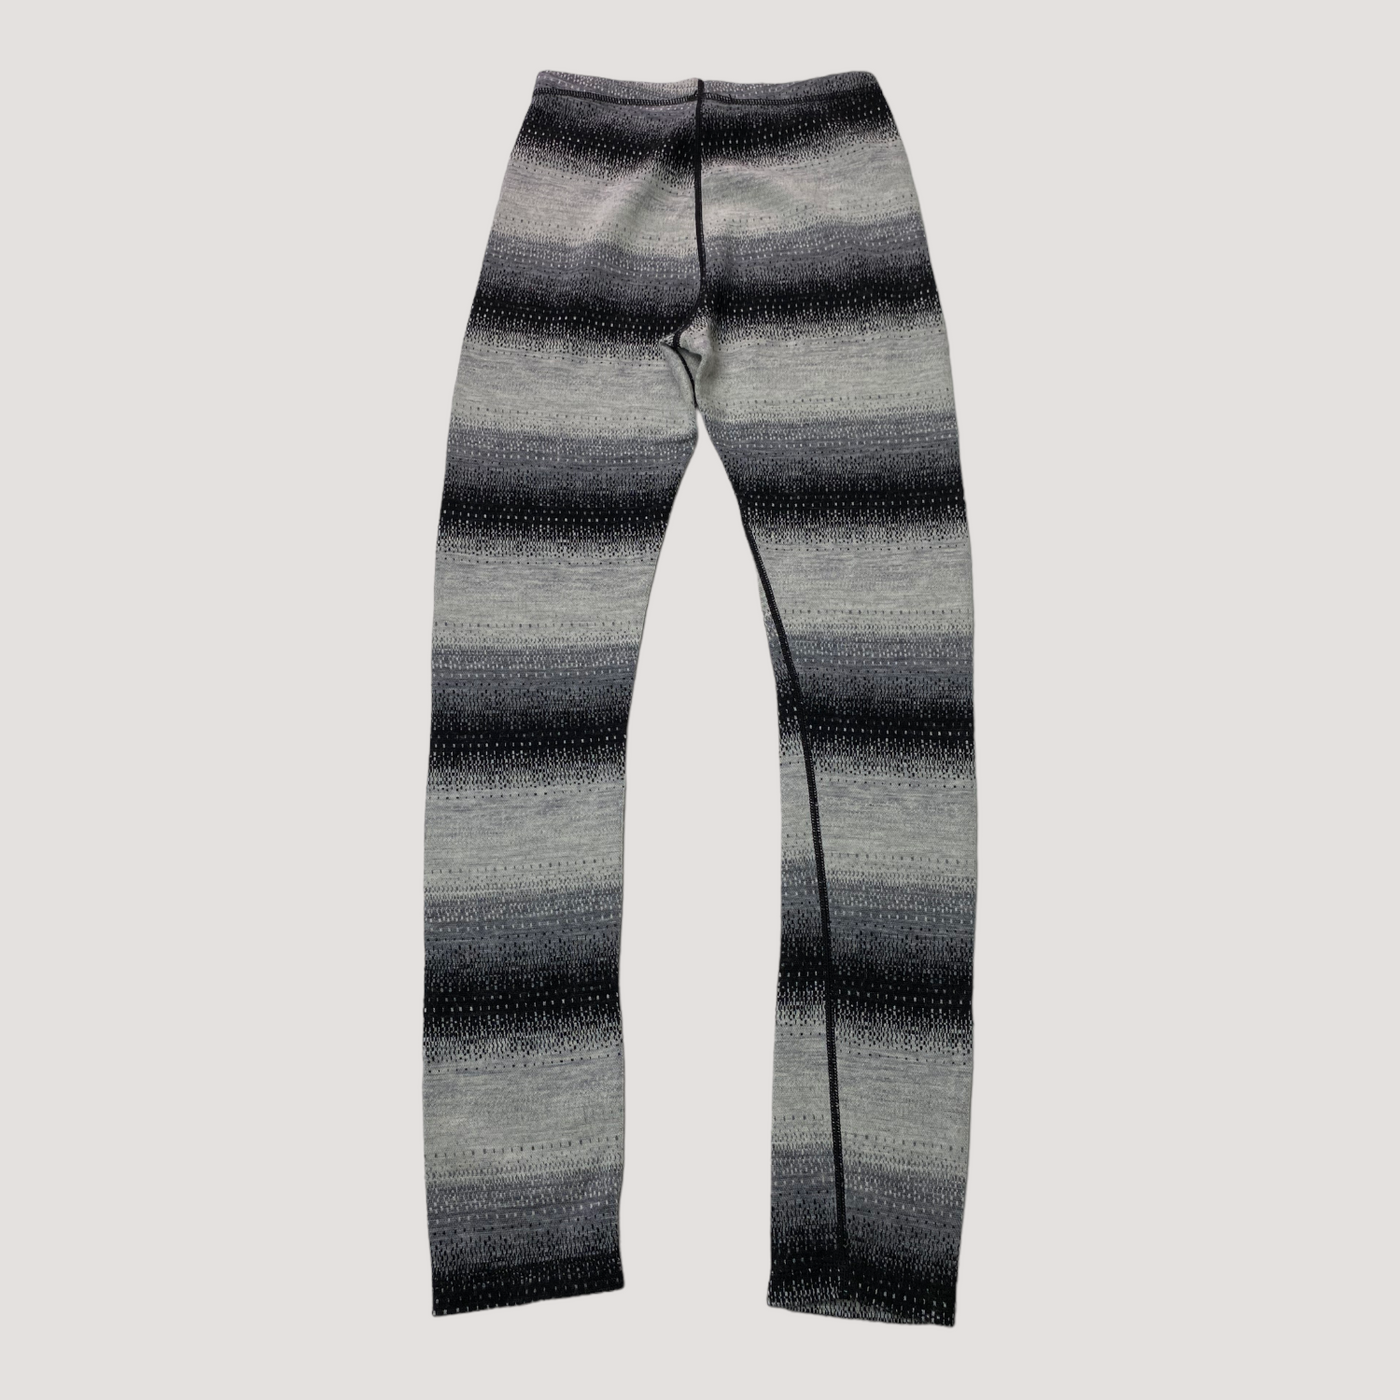 Reima wool leggings, grey/black | 140cm